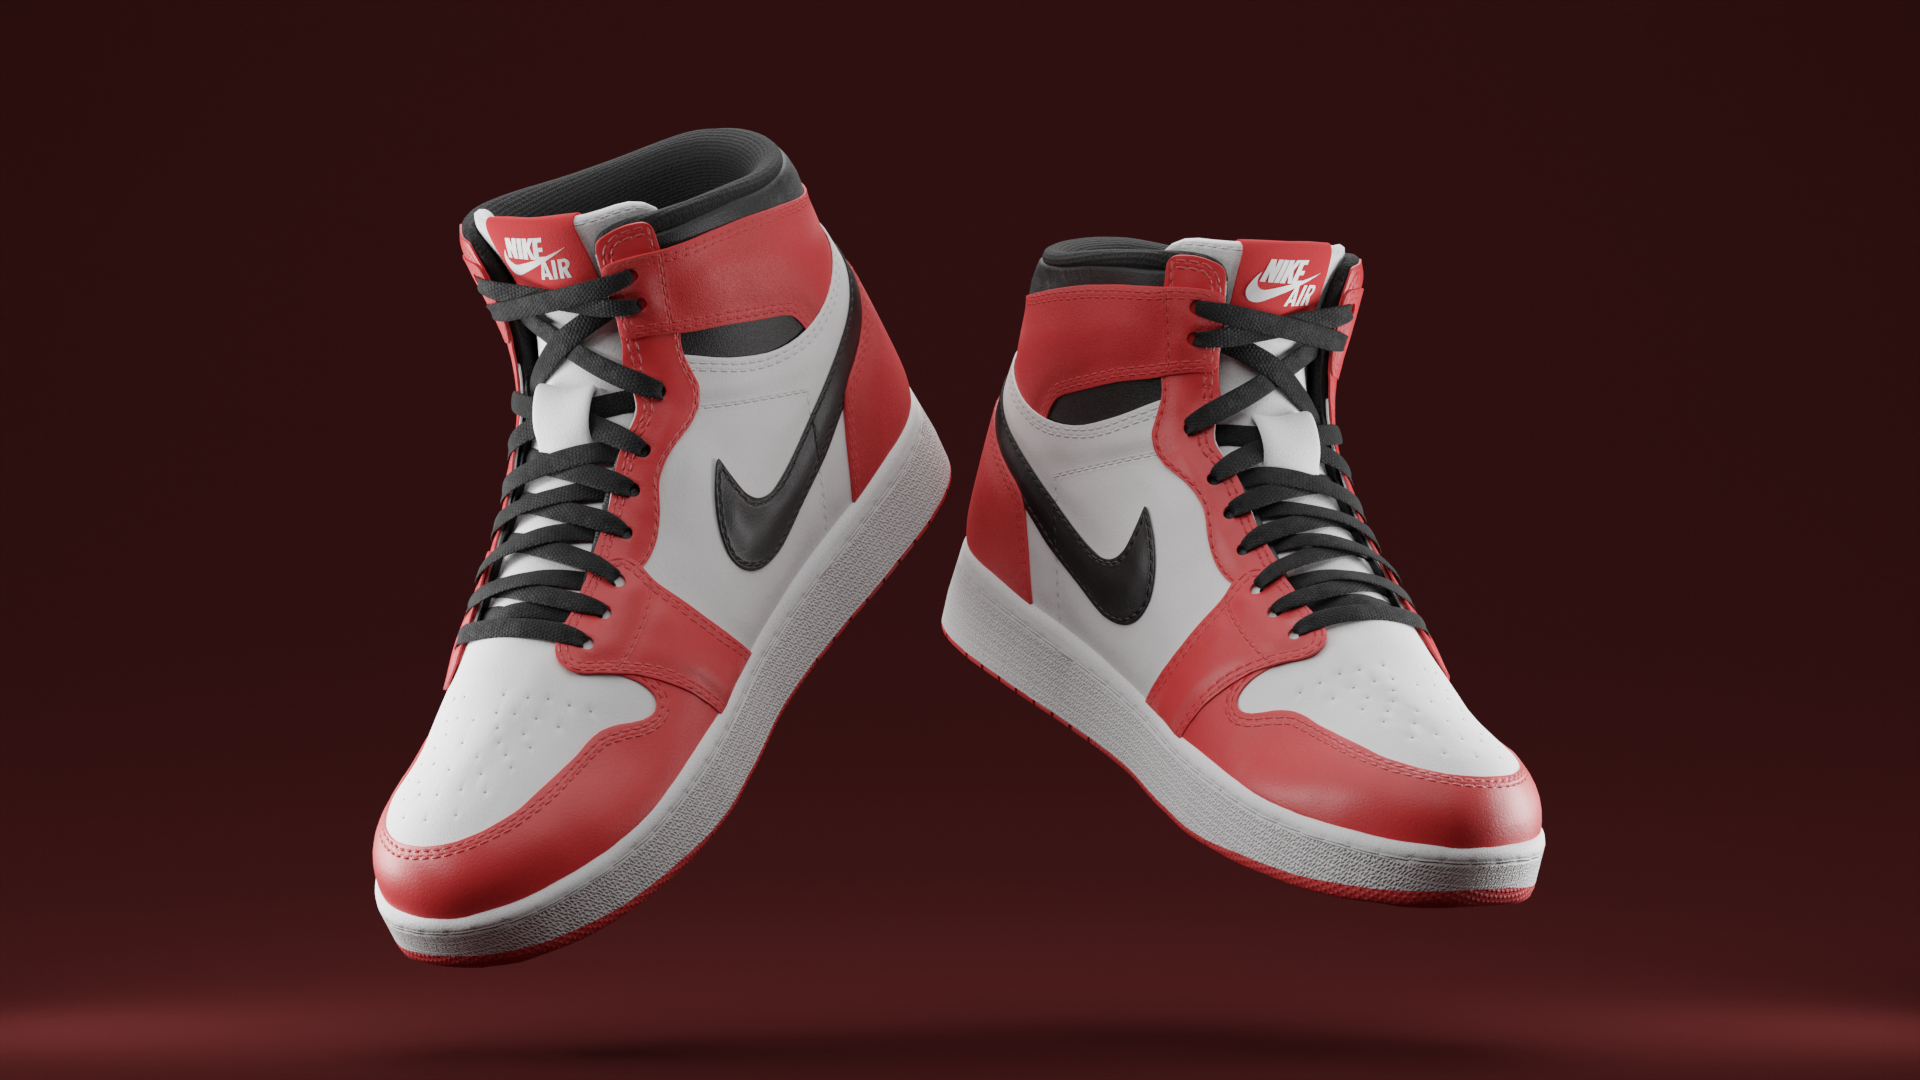 Air Jordan Nike Shoes - 02 3D Model - TurboSquid 2049571